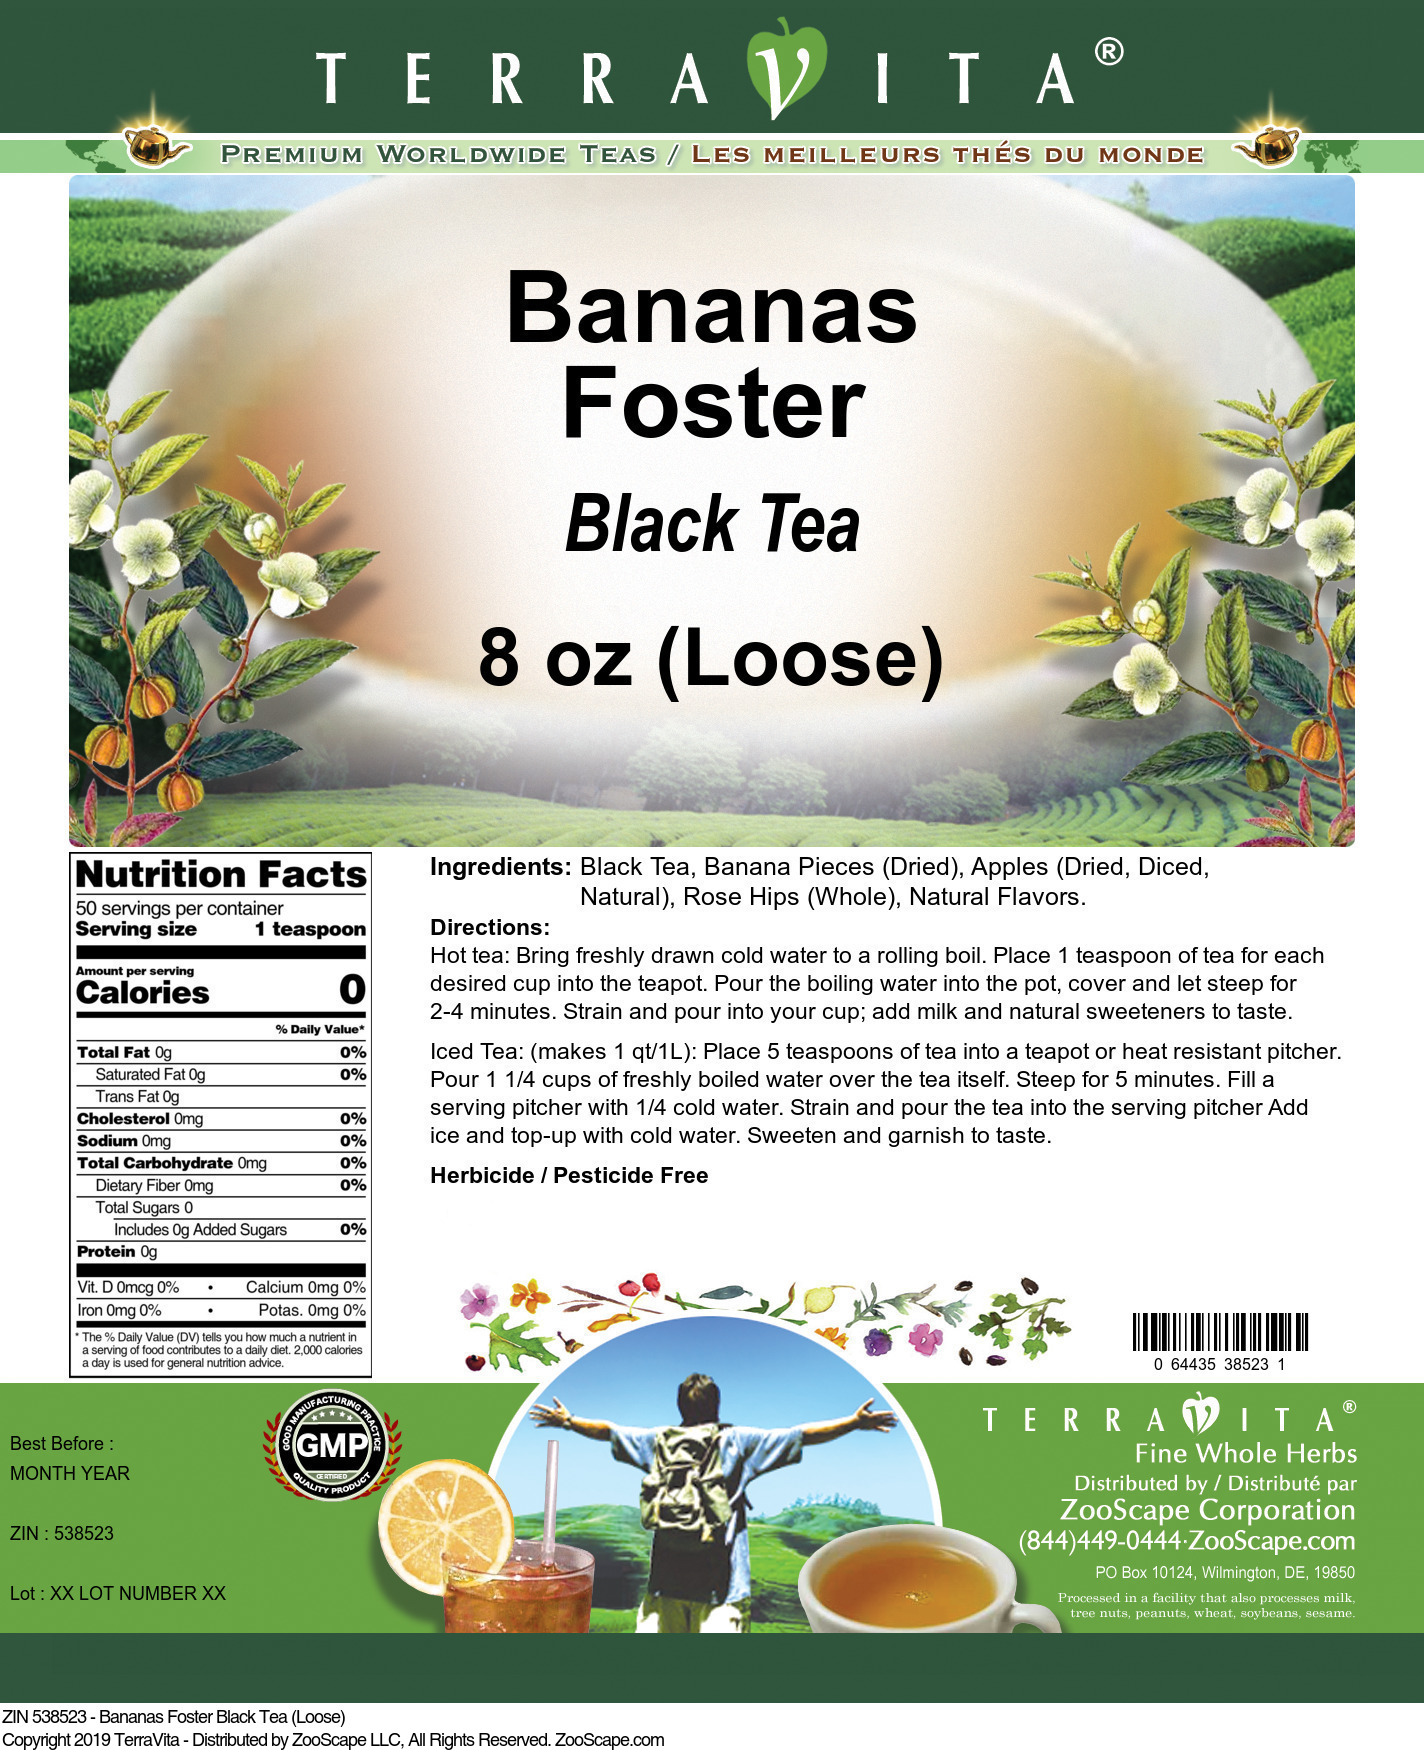 Bananas Foster Black Tea (Loose) - Label